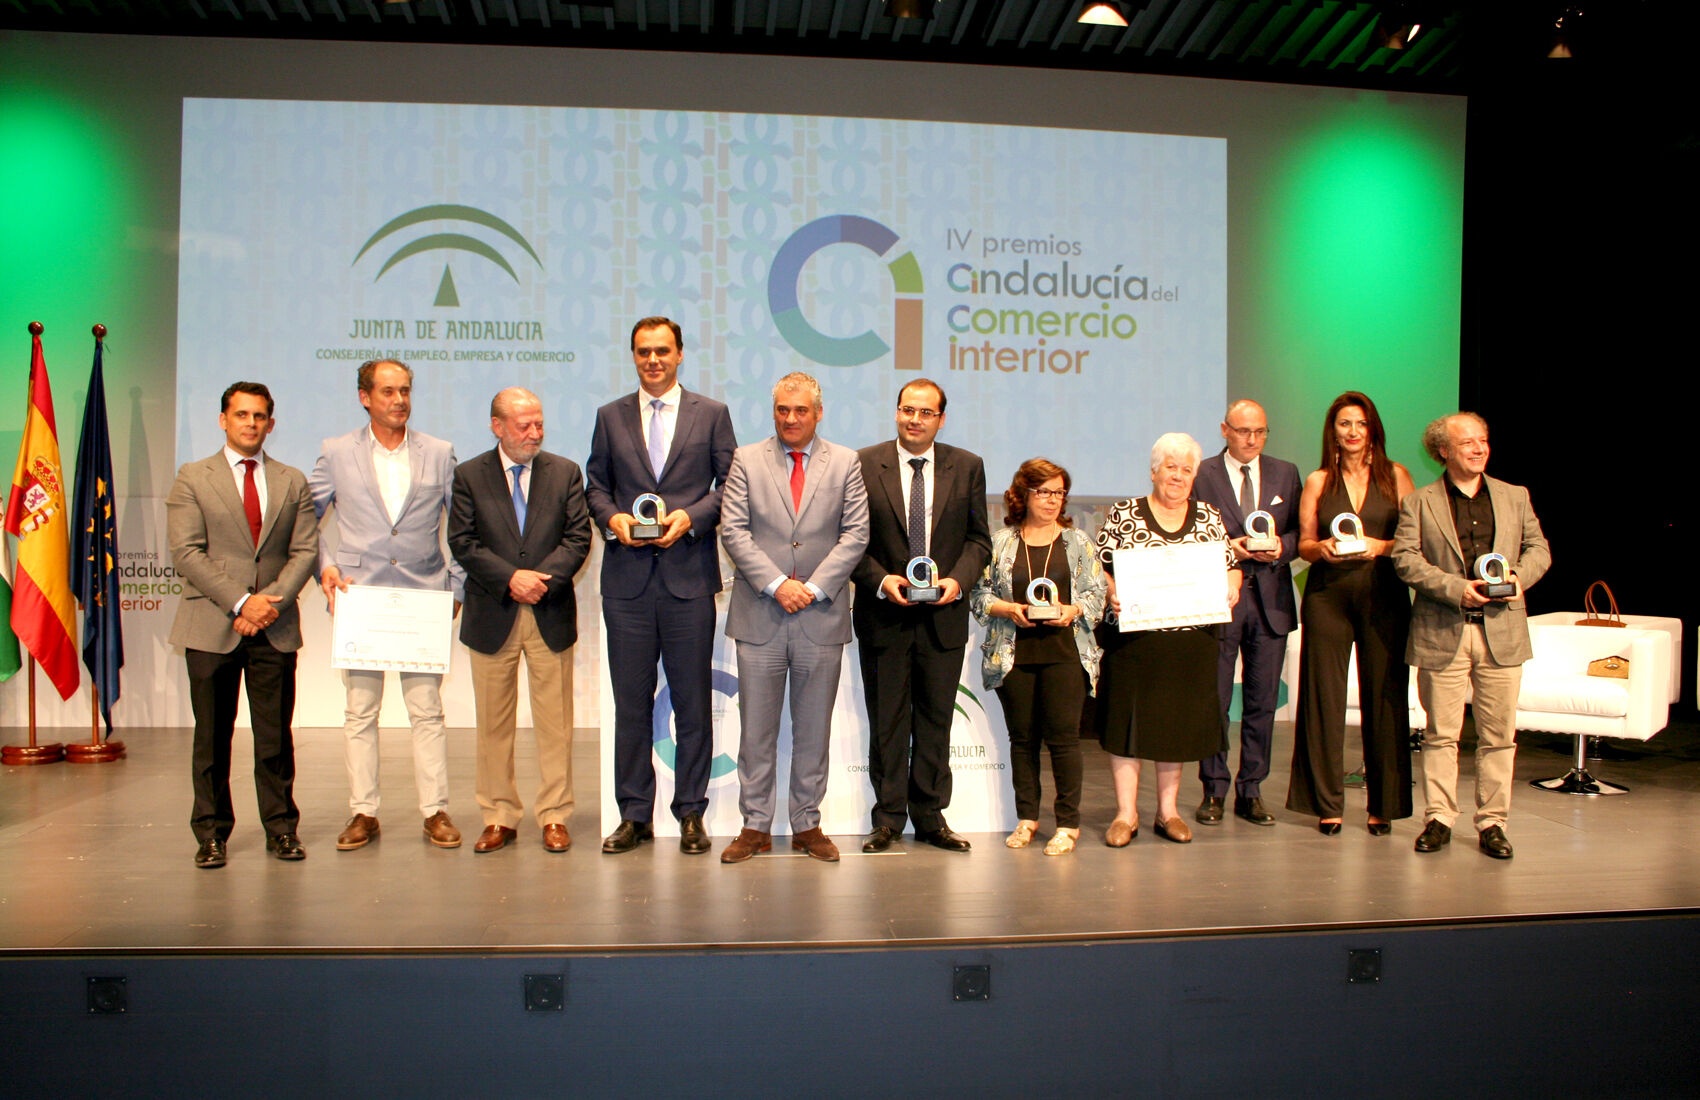 IV Premios Andalucia Comercio Interior (1)